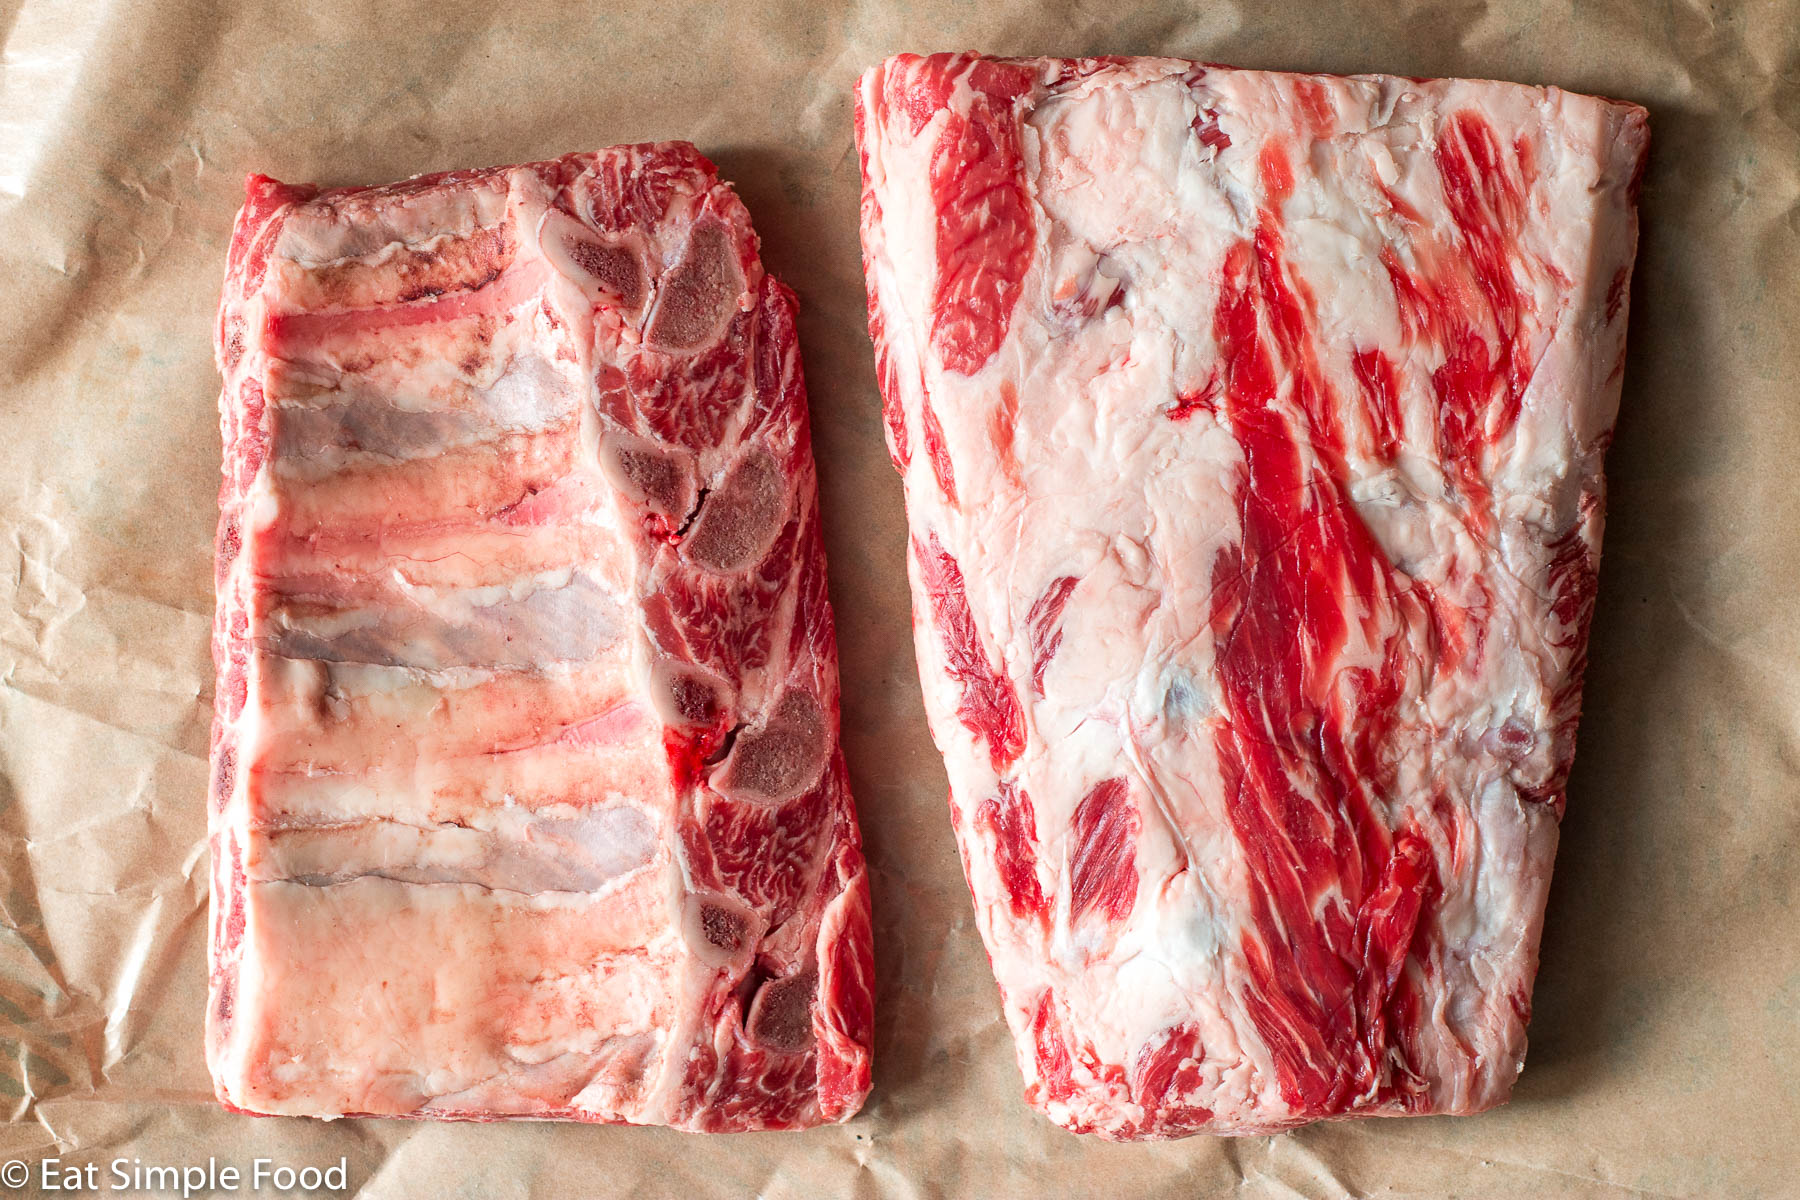 2 racks of beef back ribs. One rack has bone side up. One rack has marbled meat side up.